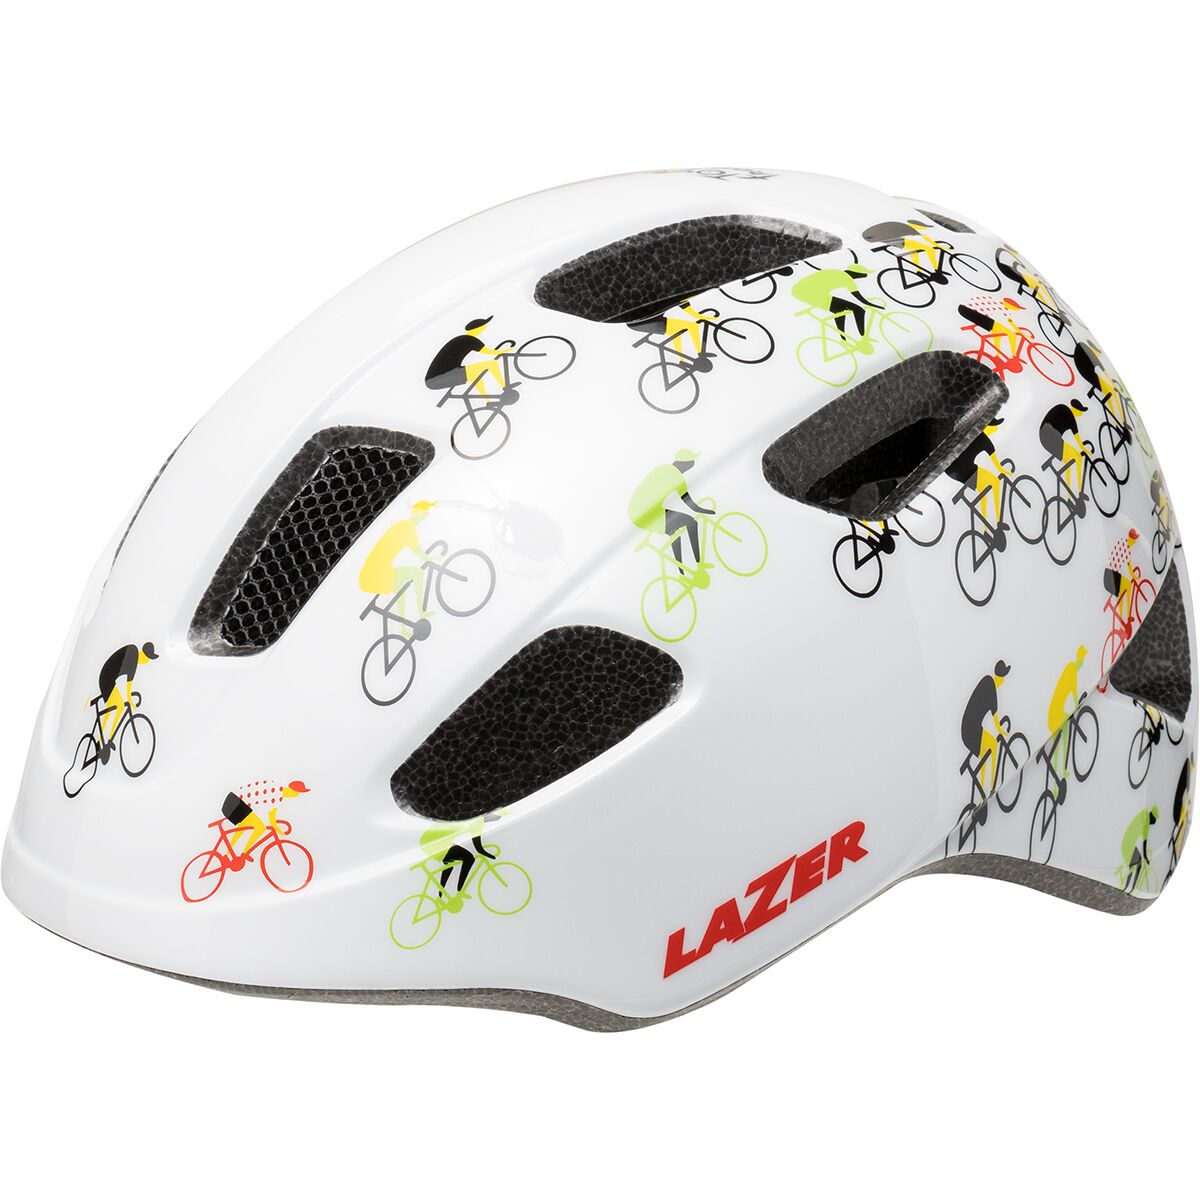 Lazer Nutz Kineticore Helmet - Kids' Tour De France, One Size